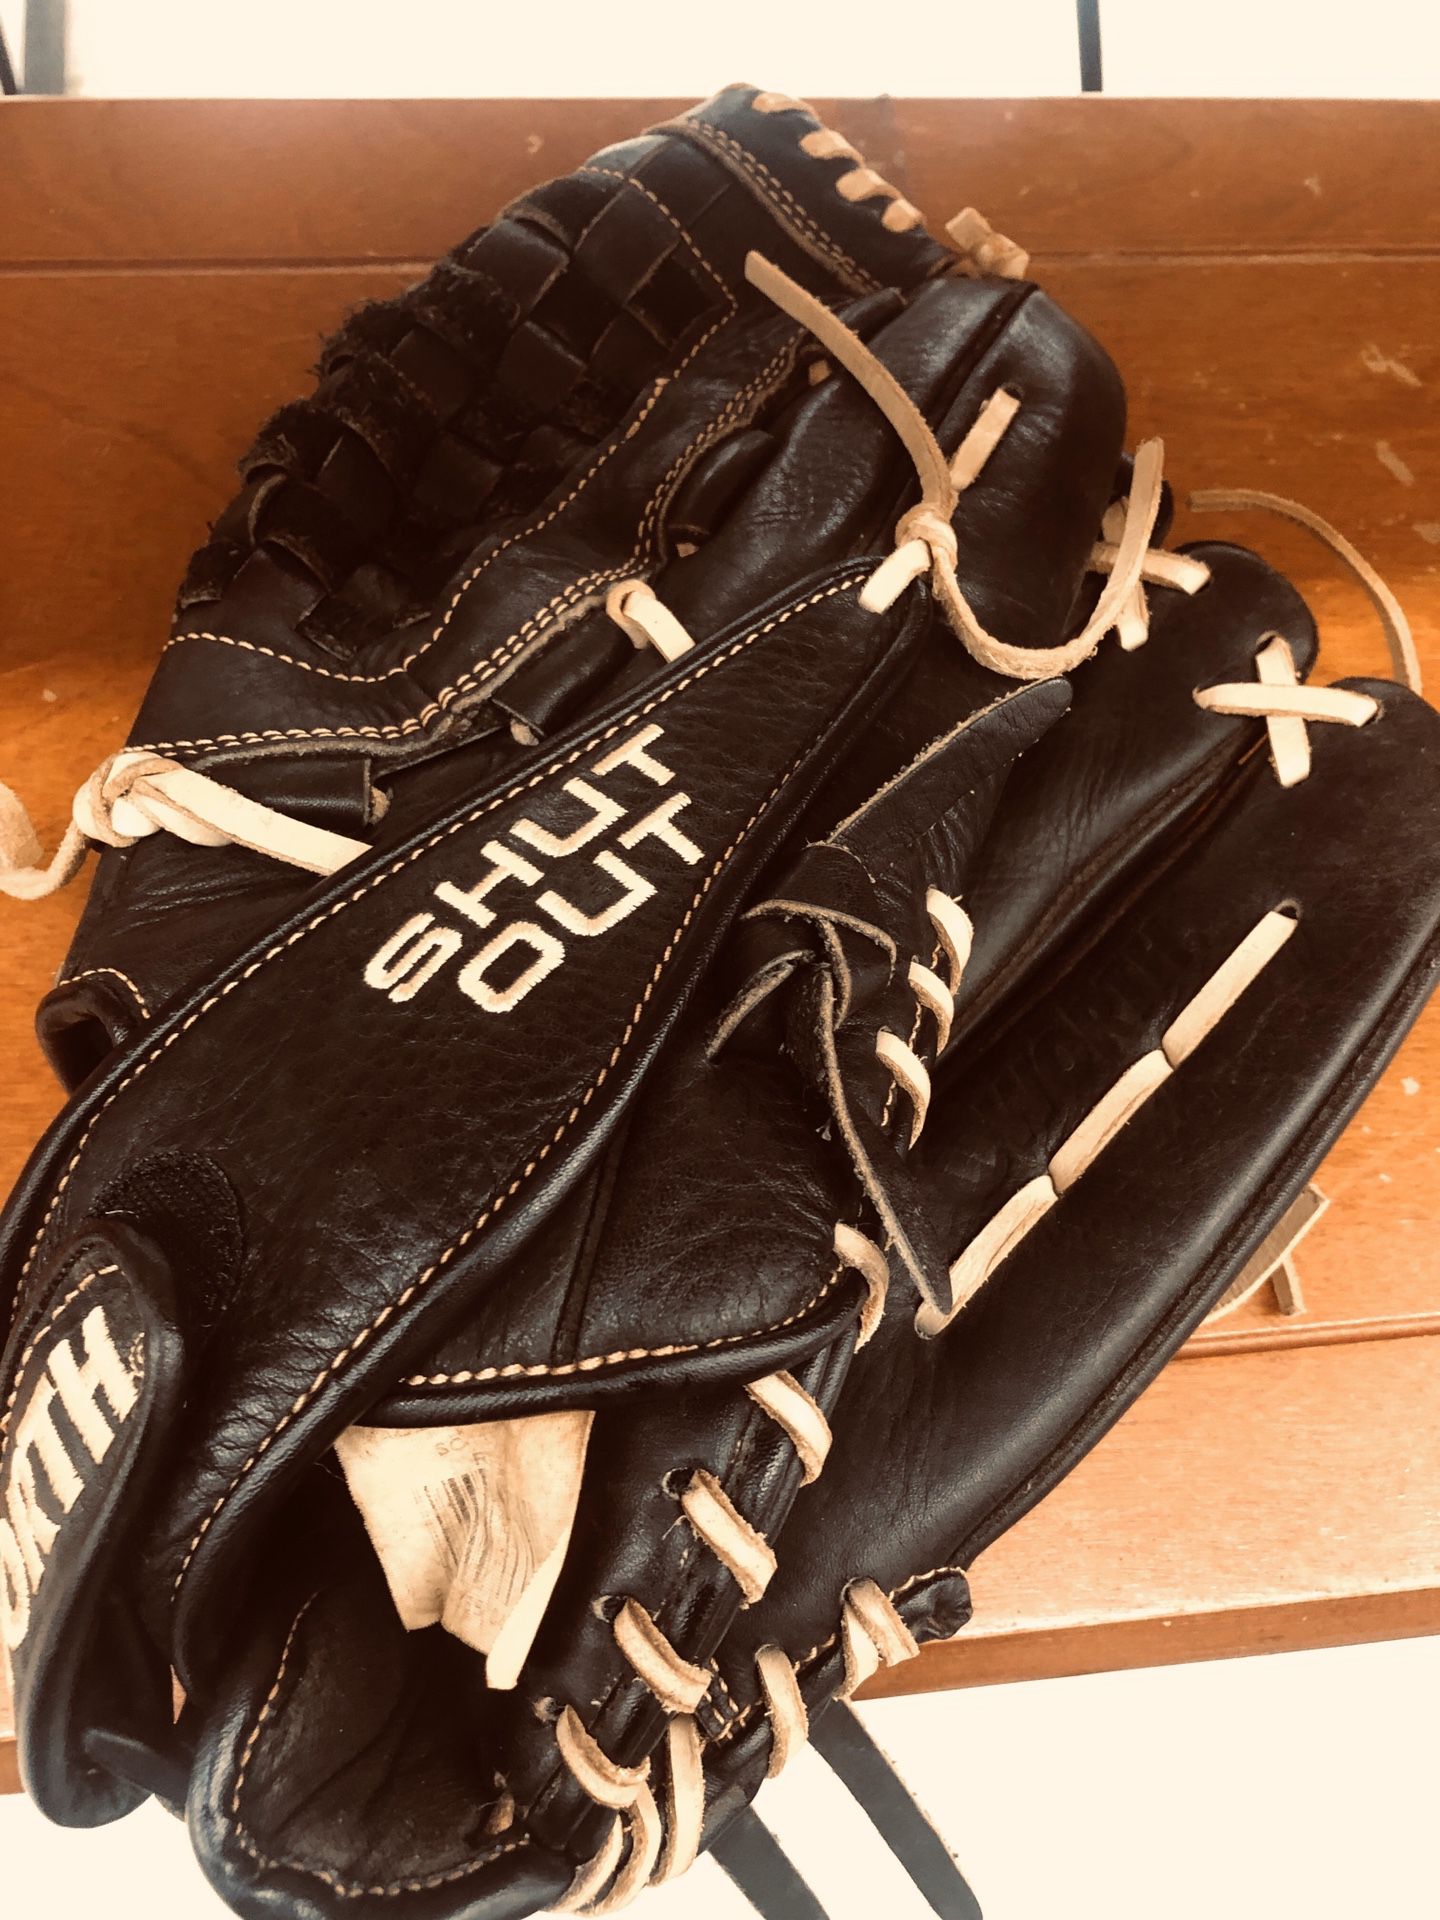 Softball glove Worth like New